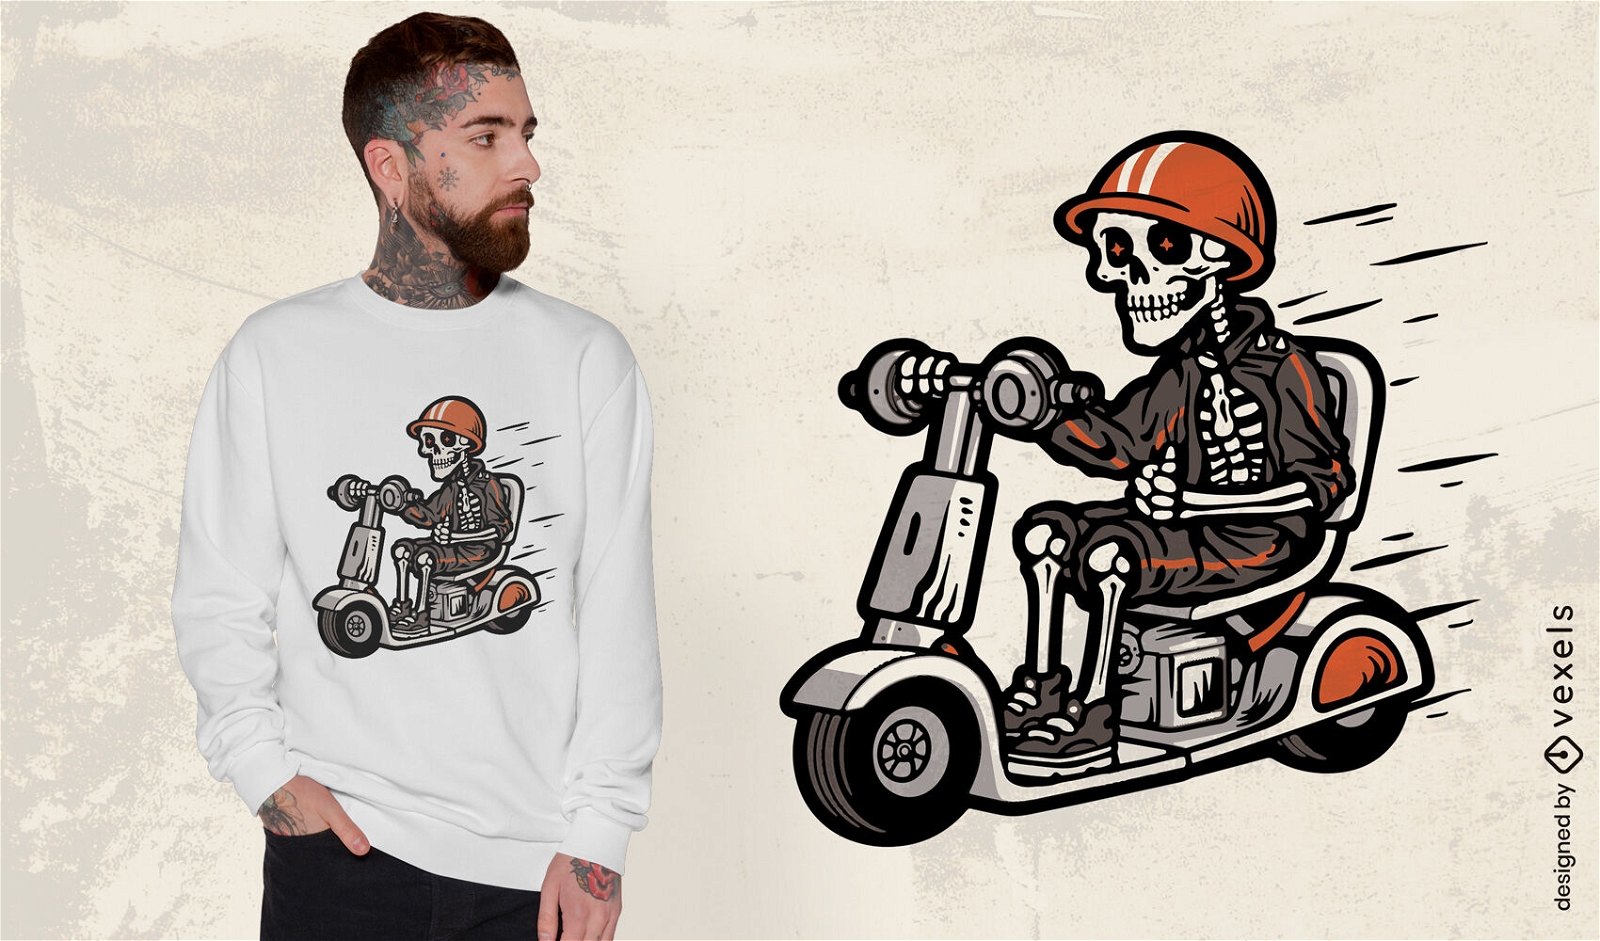 Skeleton driving a motorcycle t-shirt design